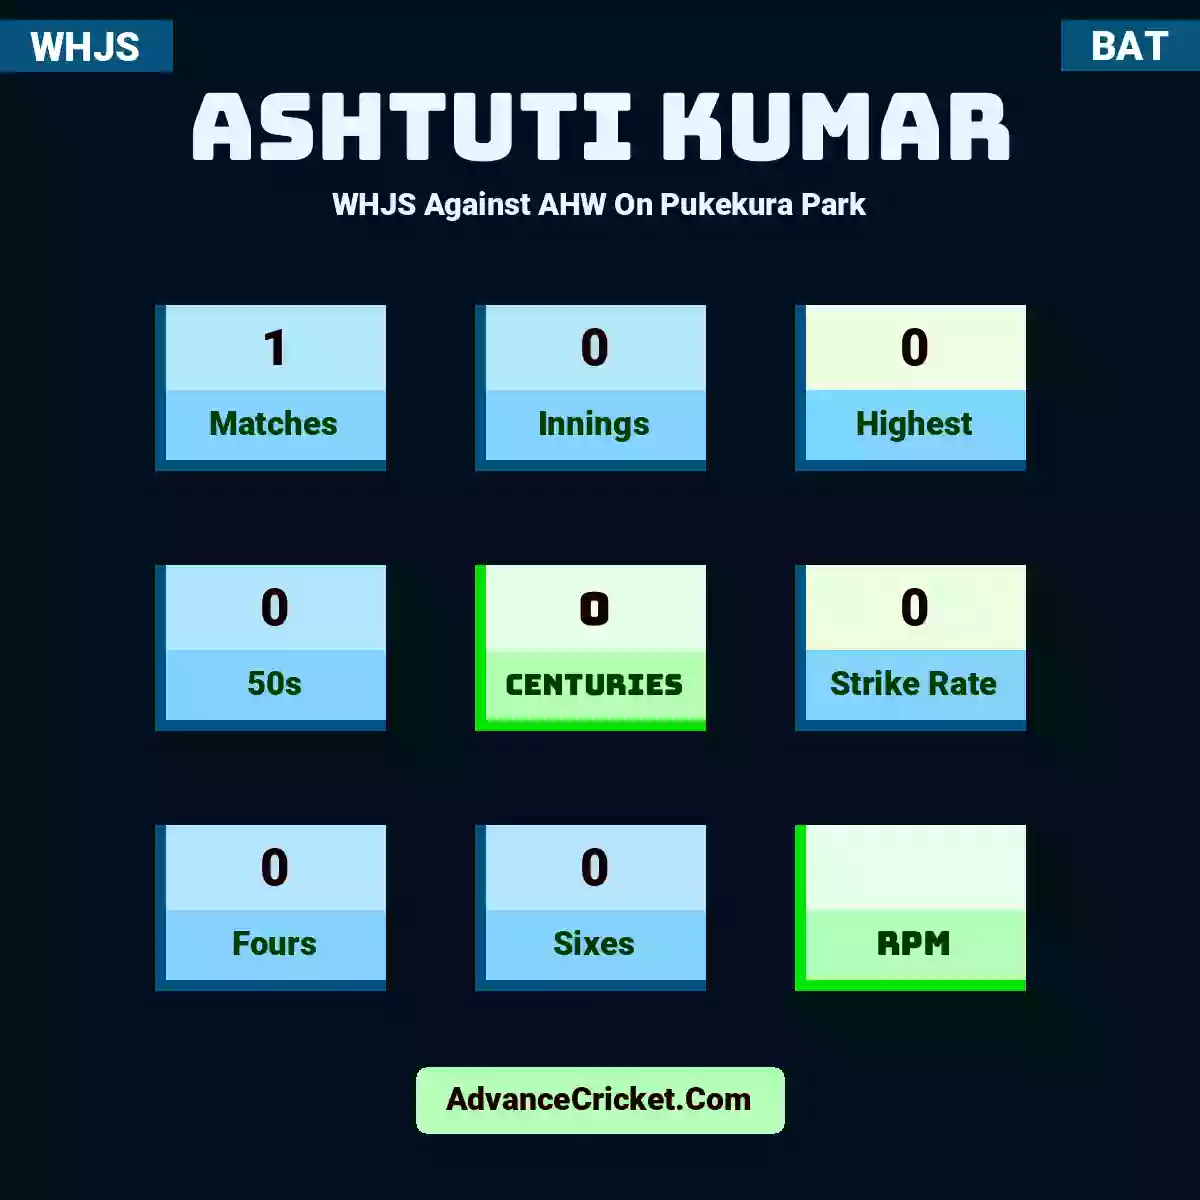 Ashtuti Kumar WHJS  Against AHW On Pukekura Park, Ashtuti Kumar played 1 matches, scored 0 runs as highest, 0 half-centuries, and 0 centuries, with a strike rate of 0. A.Kumar hit 0 fours and 0 sixes.